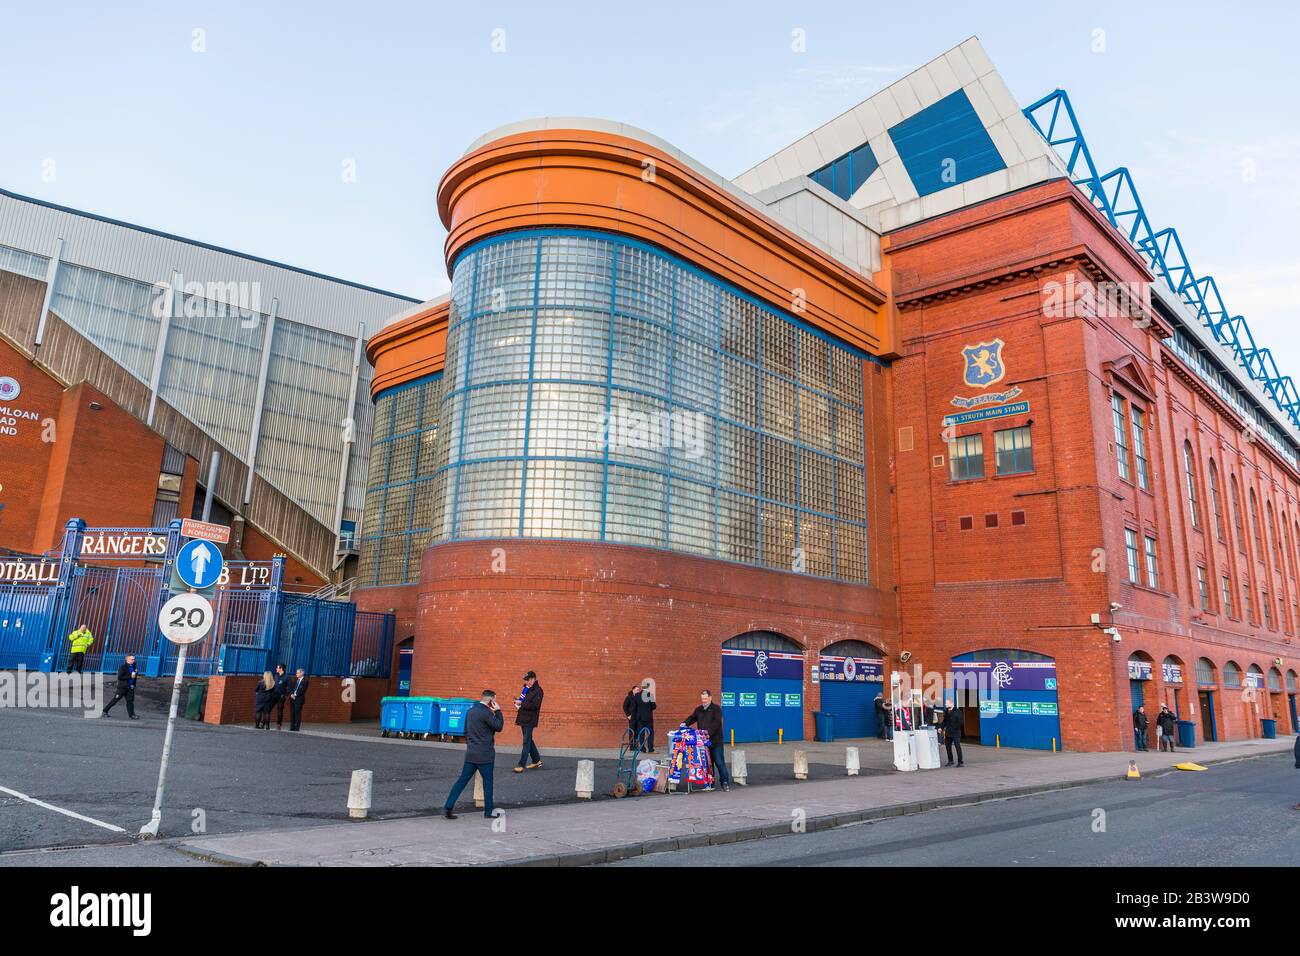 Ibrox football stadium, the home ground of Rangers Football Club, Govan, Glasgow, Scotland, UK Stock Photo